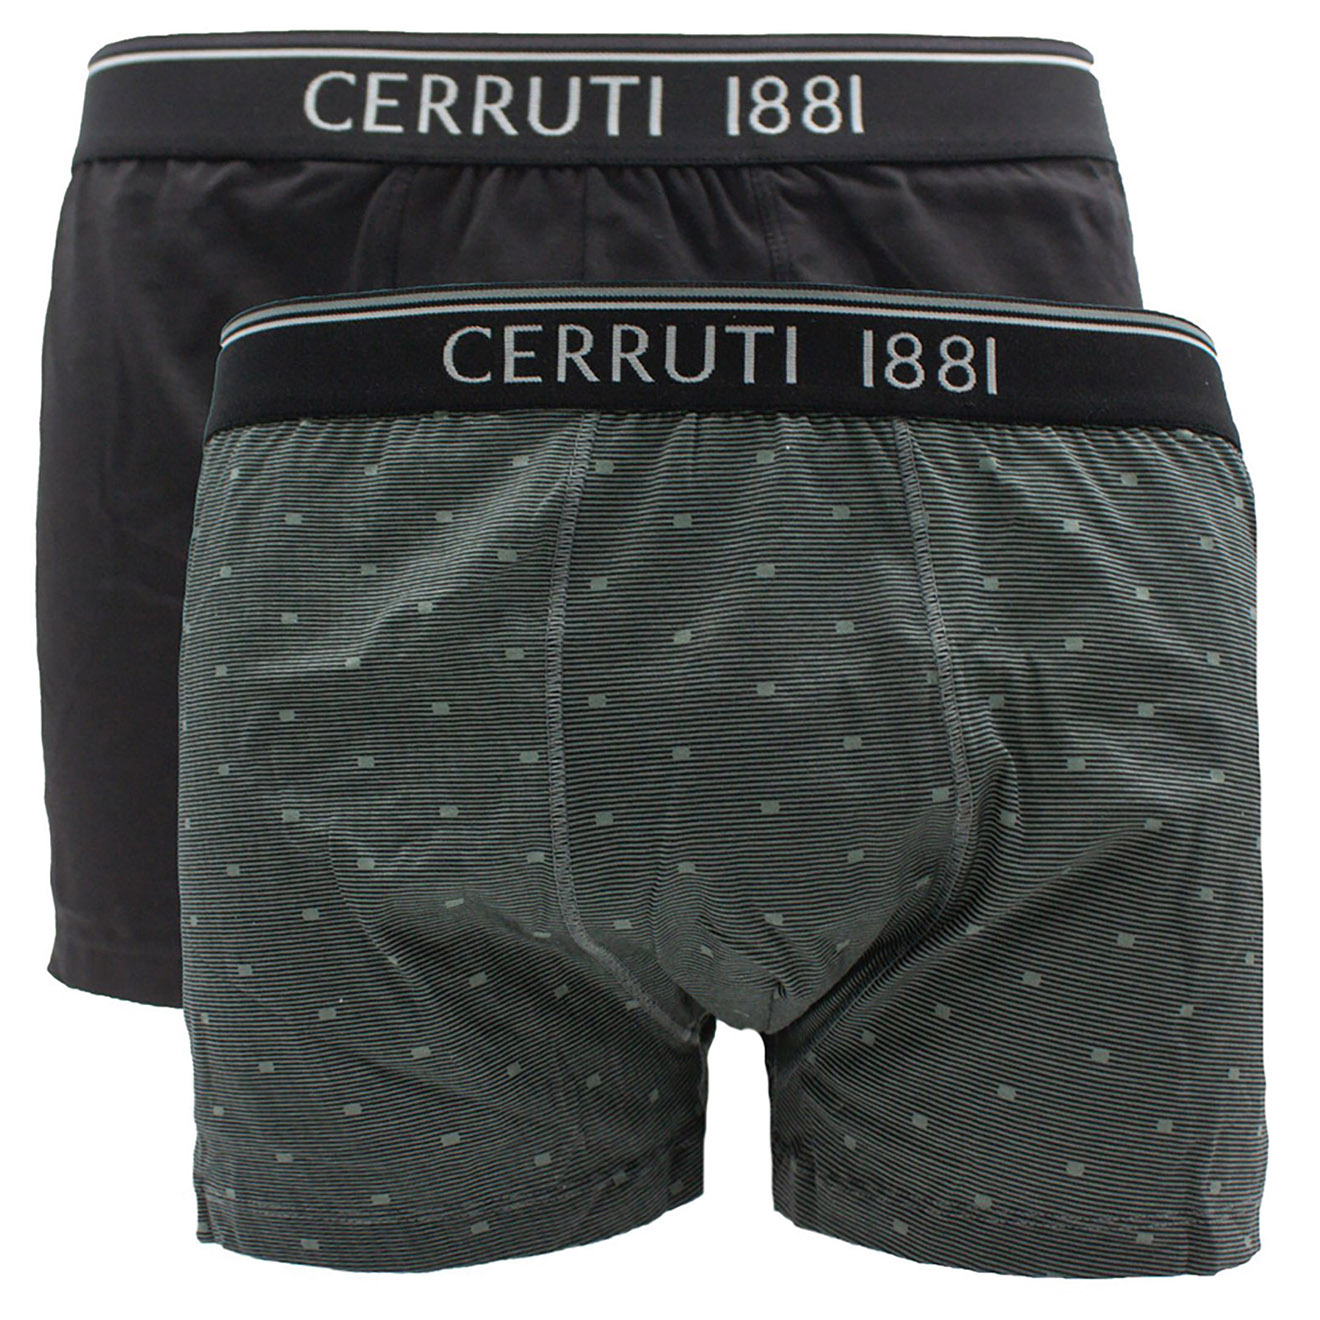 cerruti 1881 - 2 boxers multicolores